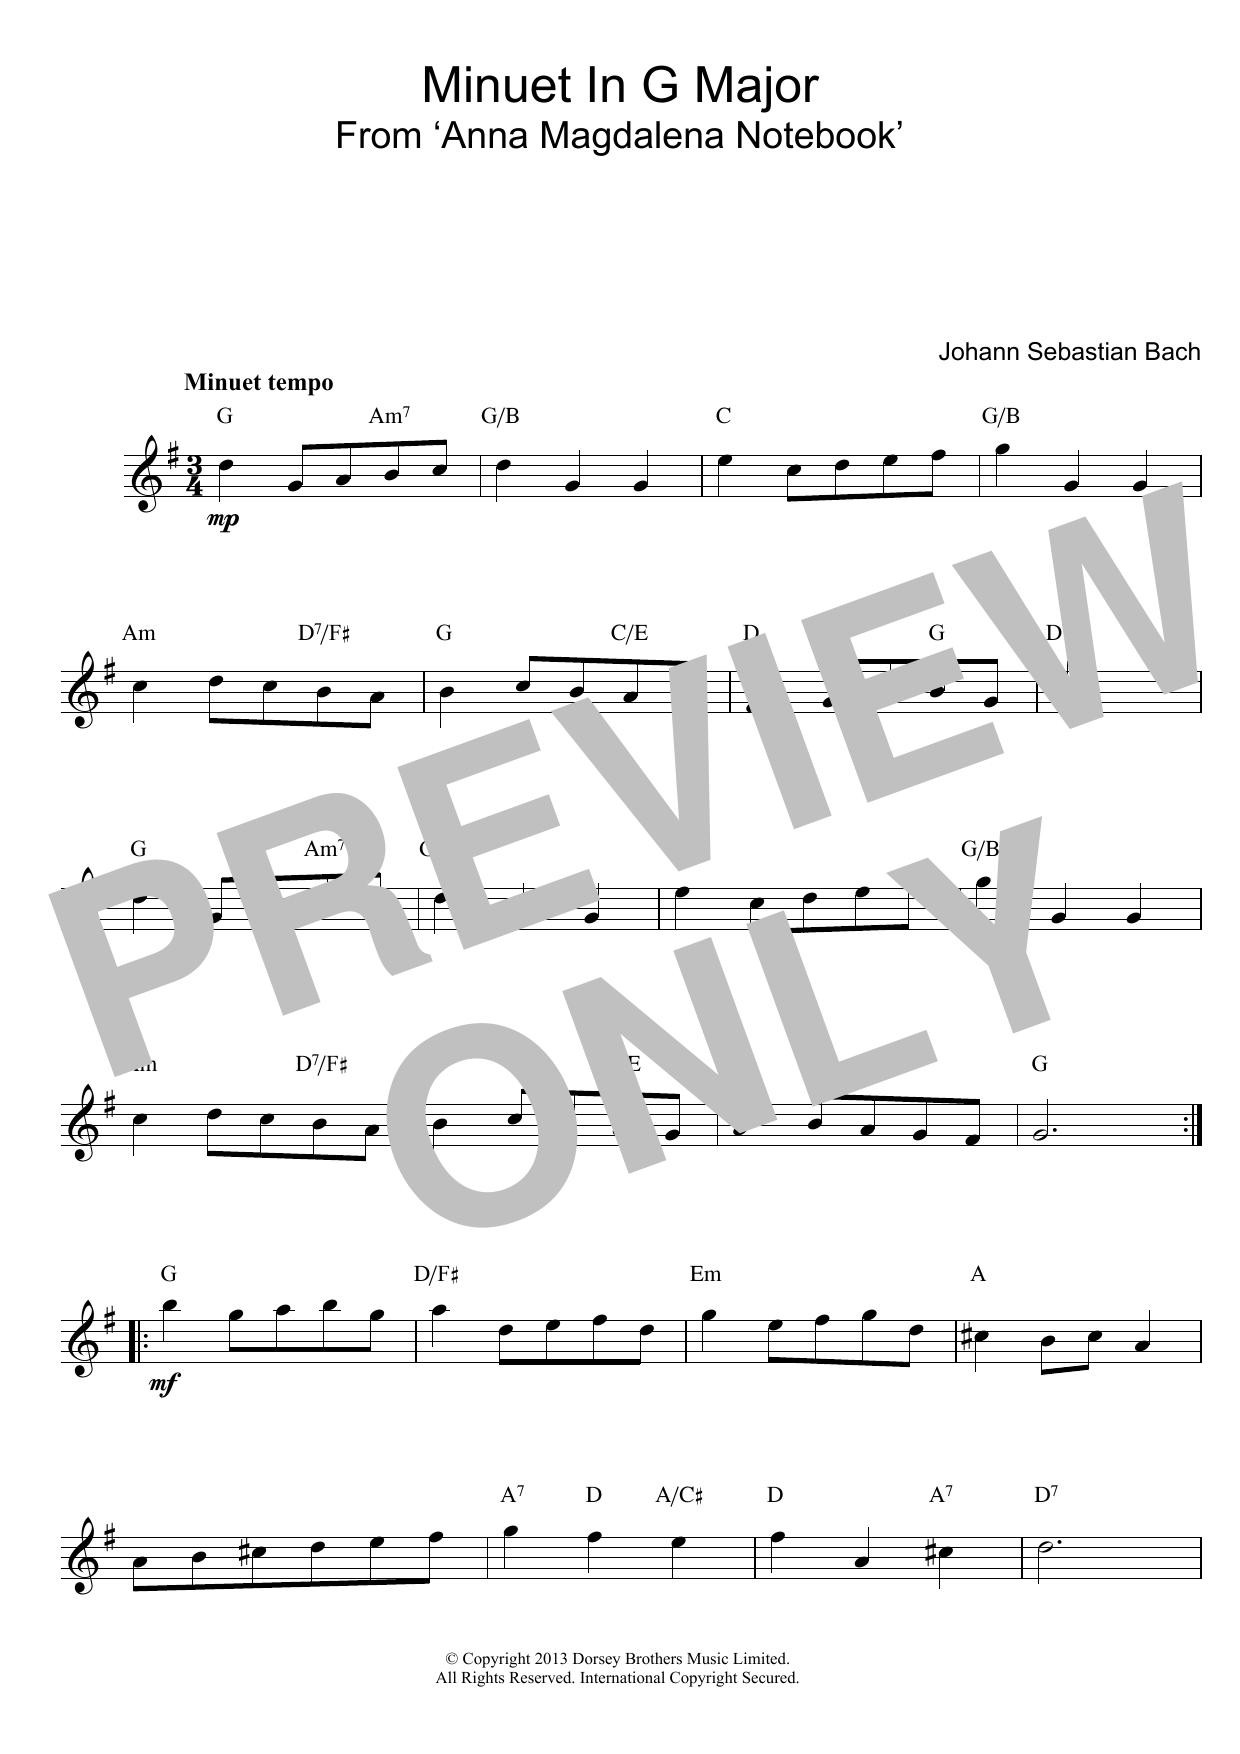 Johann Sebastian Bach Minuet In G Sheet Music Notes & Chords for Flute - Download or Print PDF